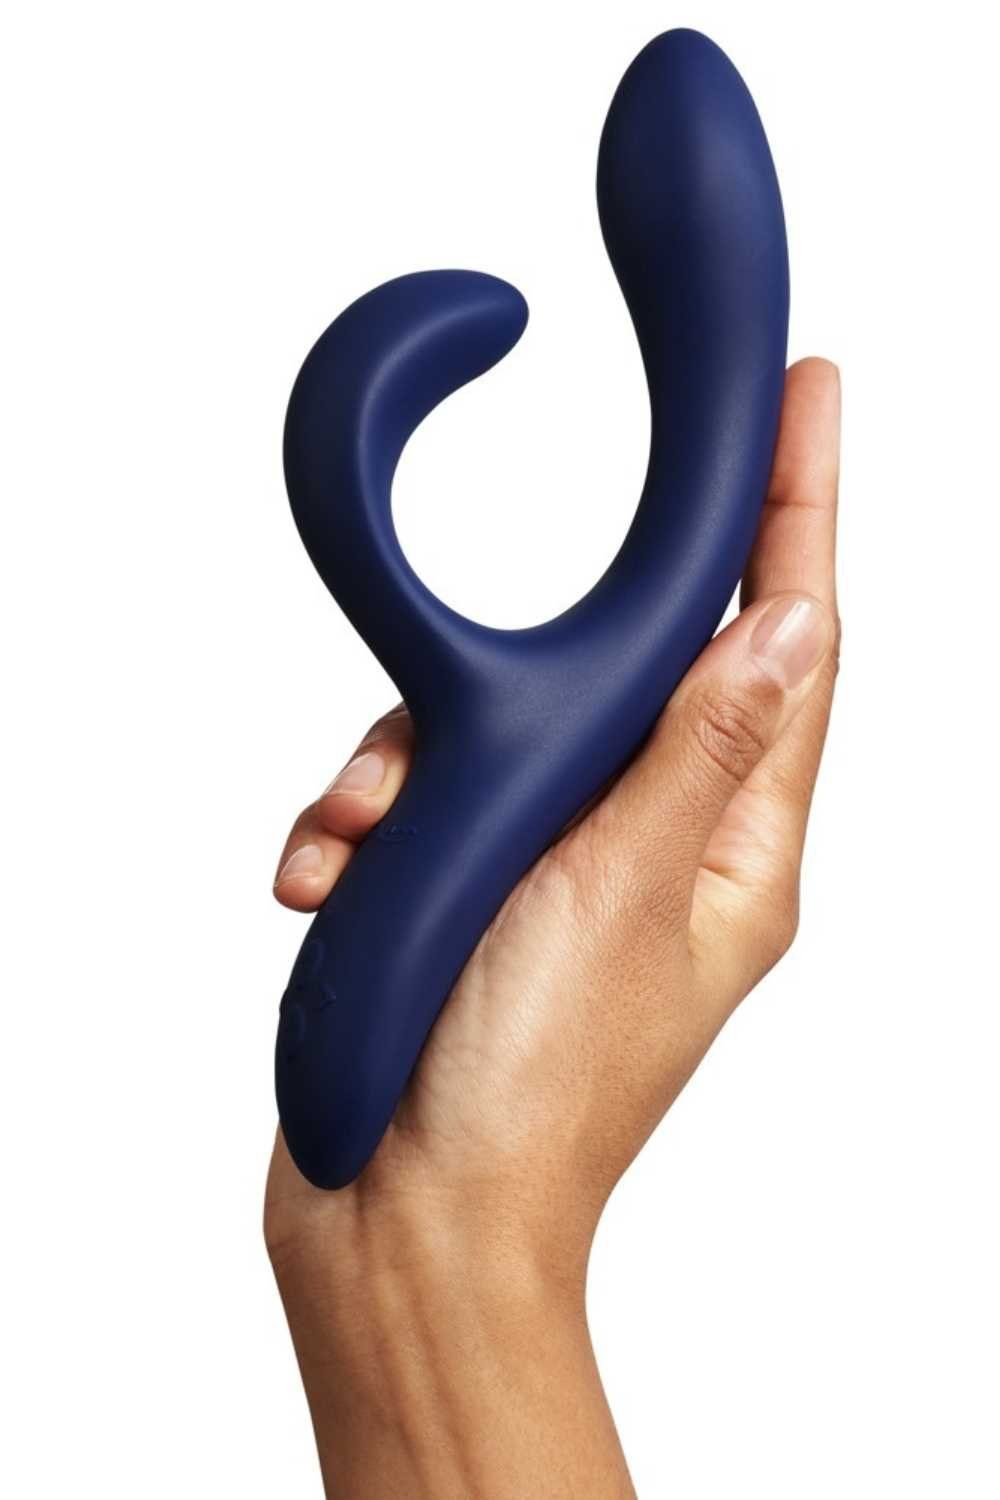 We Vibe Rabbit-Vibrator We Vibe NOVA 2, Klitoris und G-Punkt Vibrator, softes Silikon, wasserd, wasserdicht,ferngesteuert,App gesteuert blau